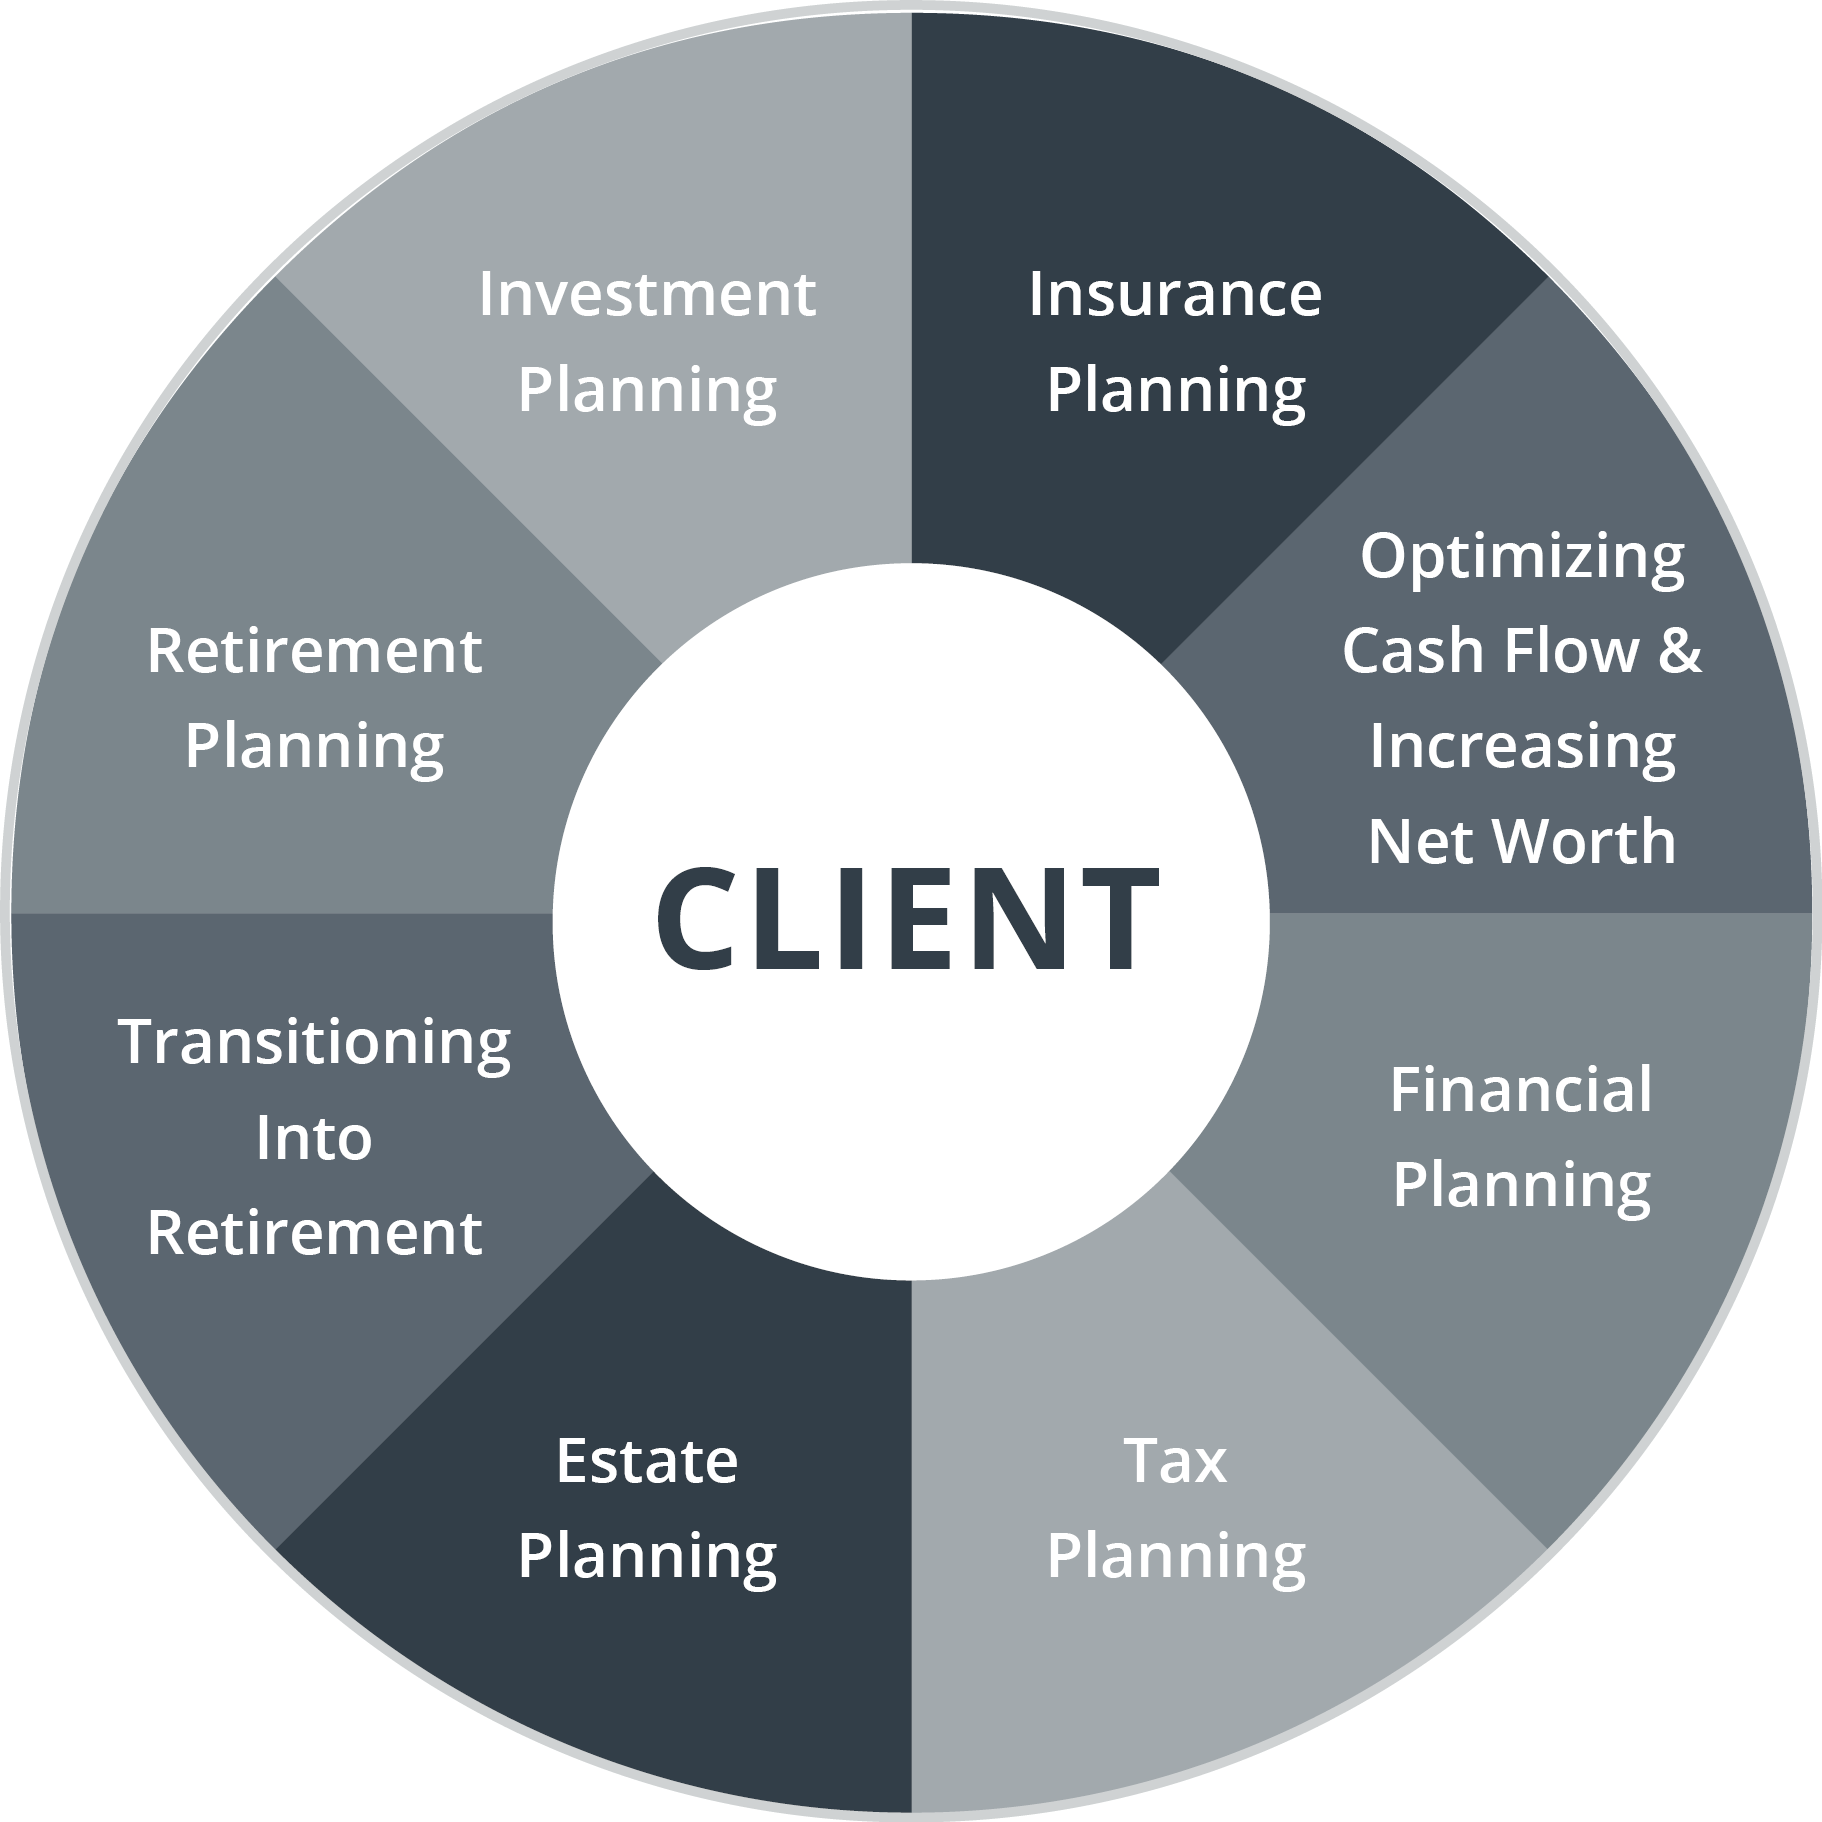 Client wealth planning